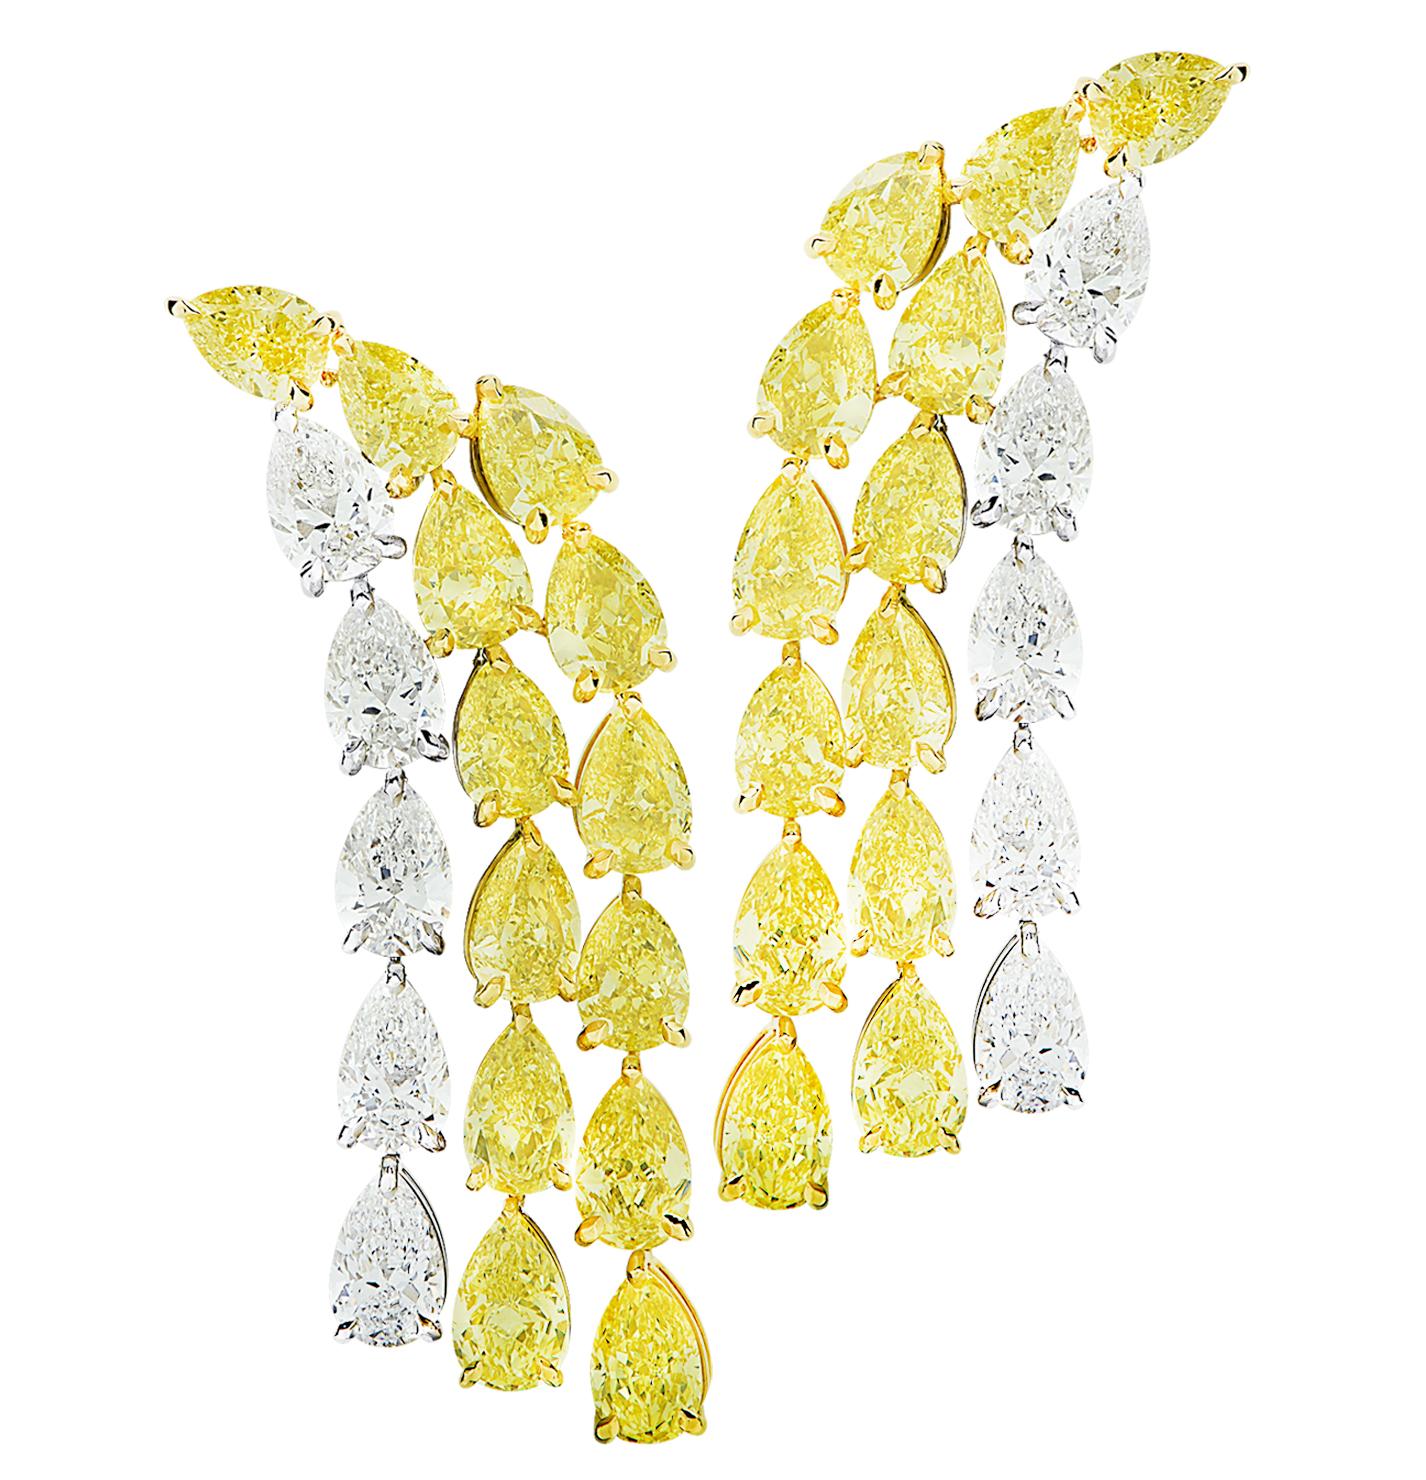 Vivid Diamonds GIA Certified 19.64 Carat Fancy Intense Yellow Pear Shape Diamond In New Condition For Sale In Miami, FL